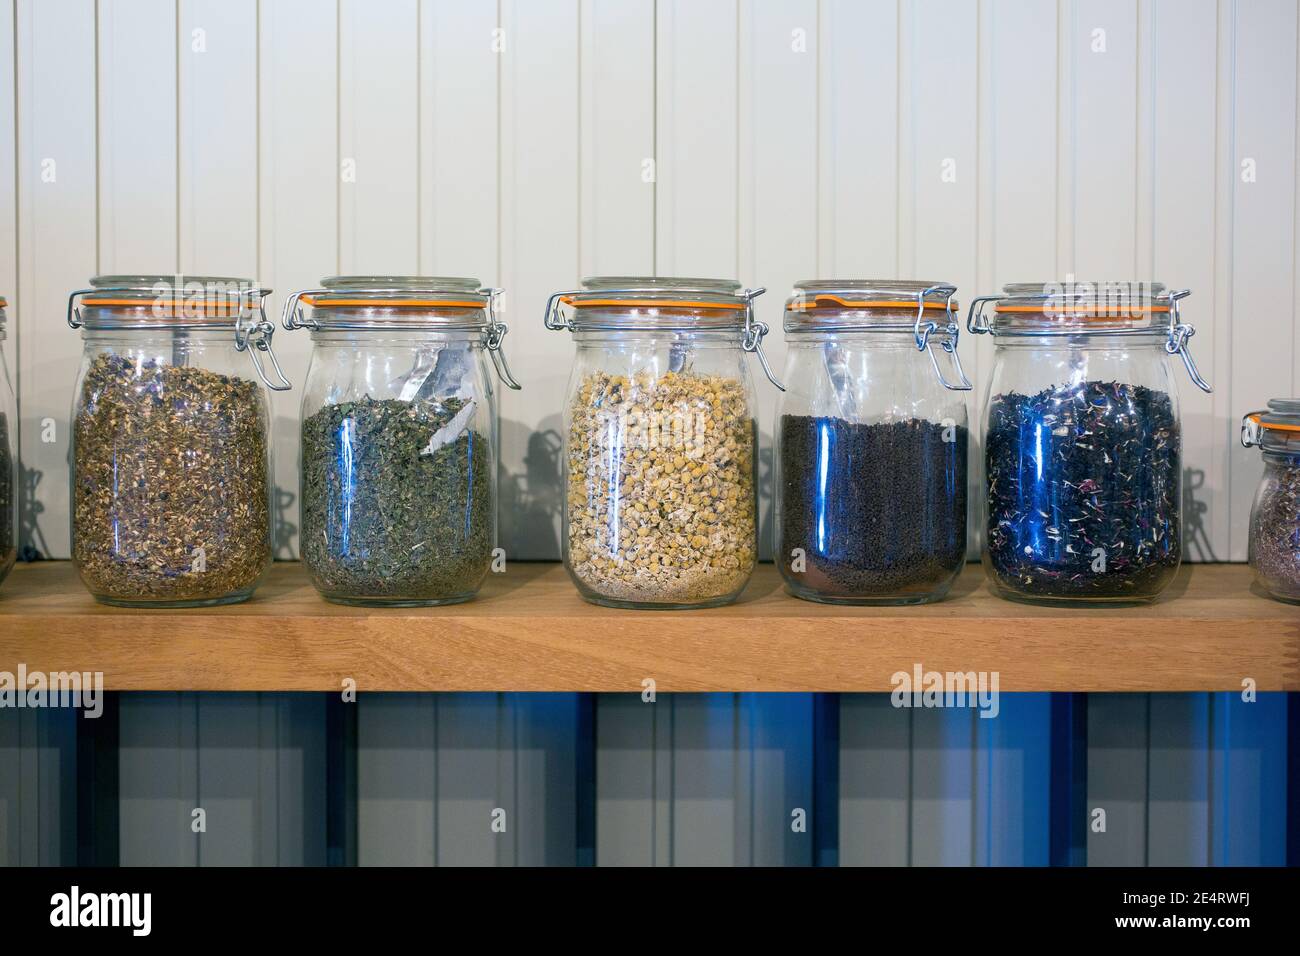 https://c8.alamy.com/comp/2E4RWFJ/rustic-kitchen-tea-storage-arrangement-in-glass-jars-with-white-wood-background-2E4RWFJ.jpg